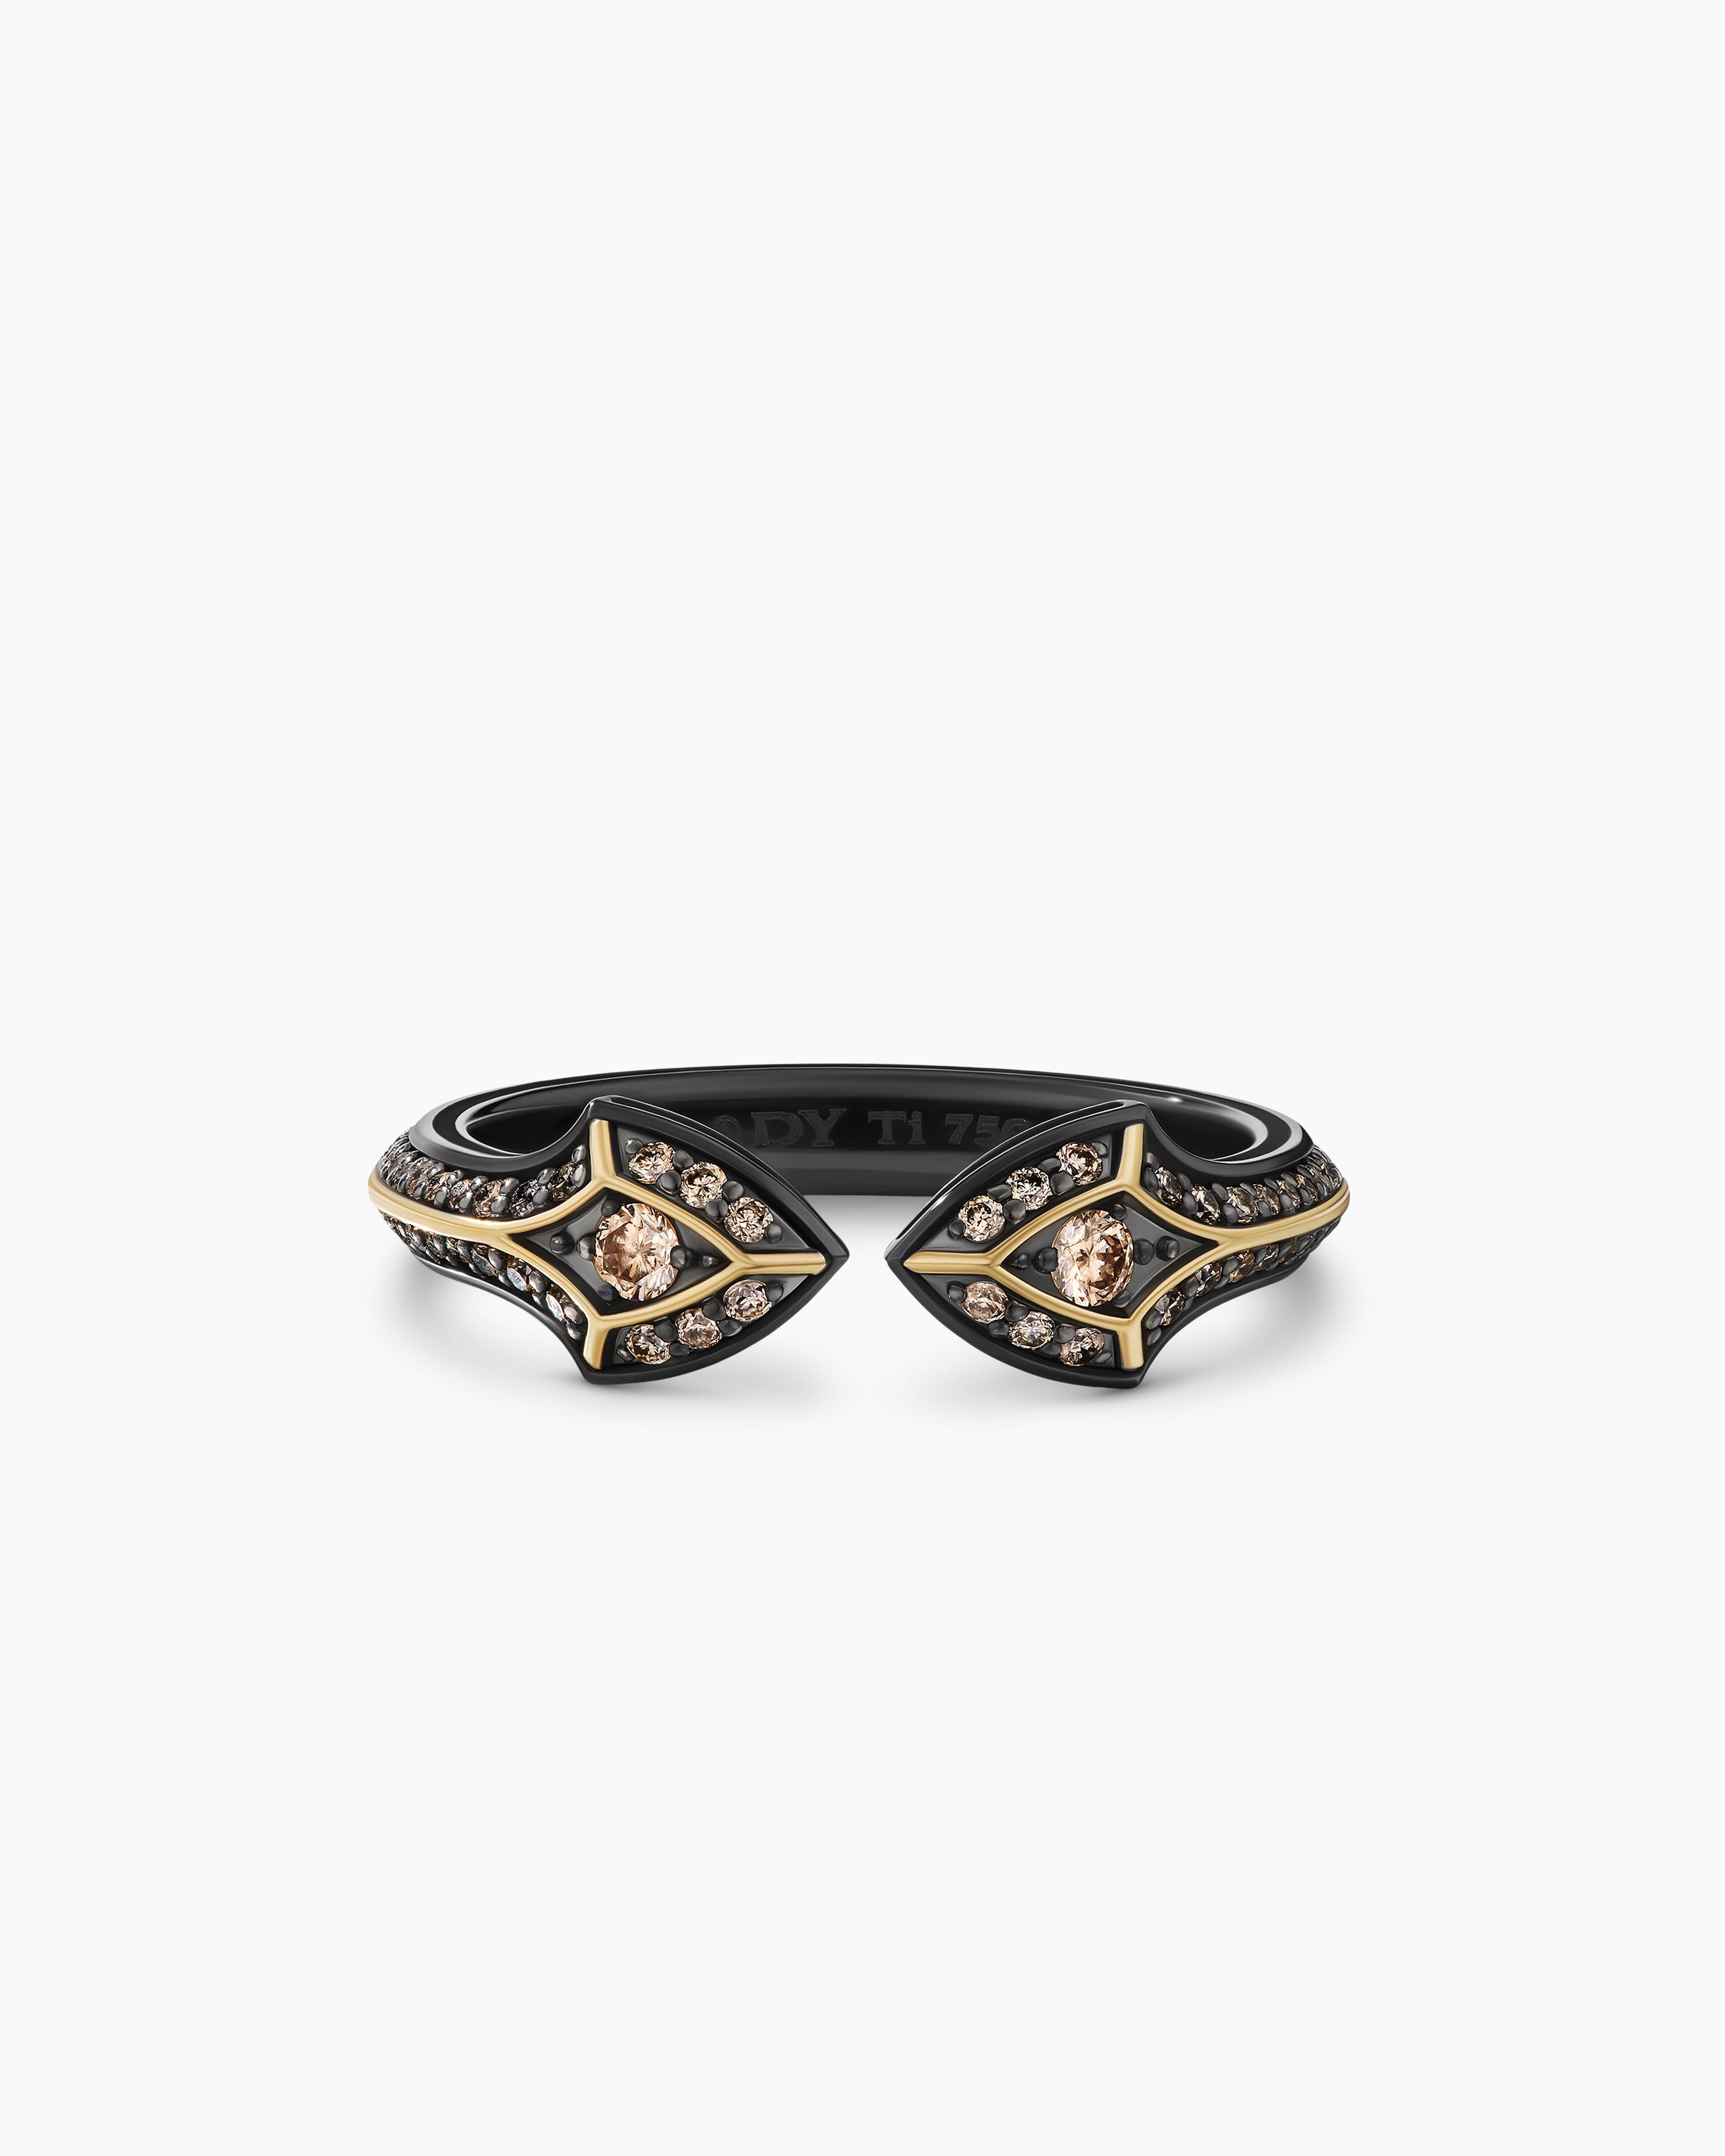 Rockman Jewelry Crux IV Gold Key Ring